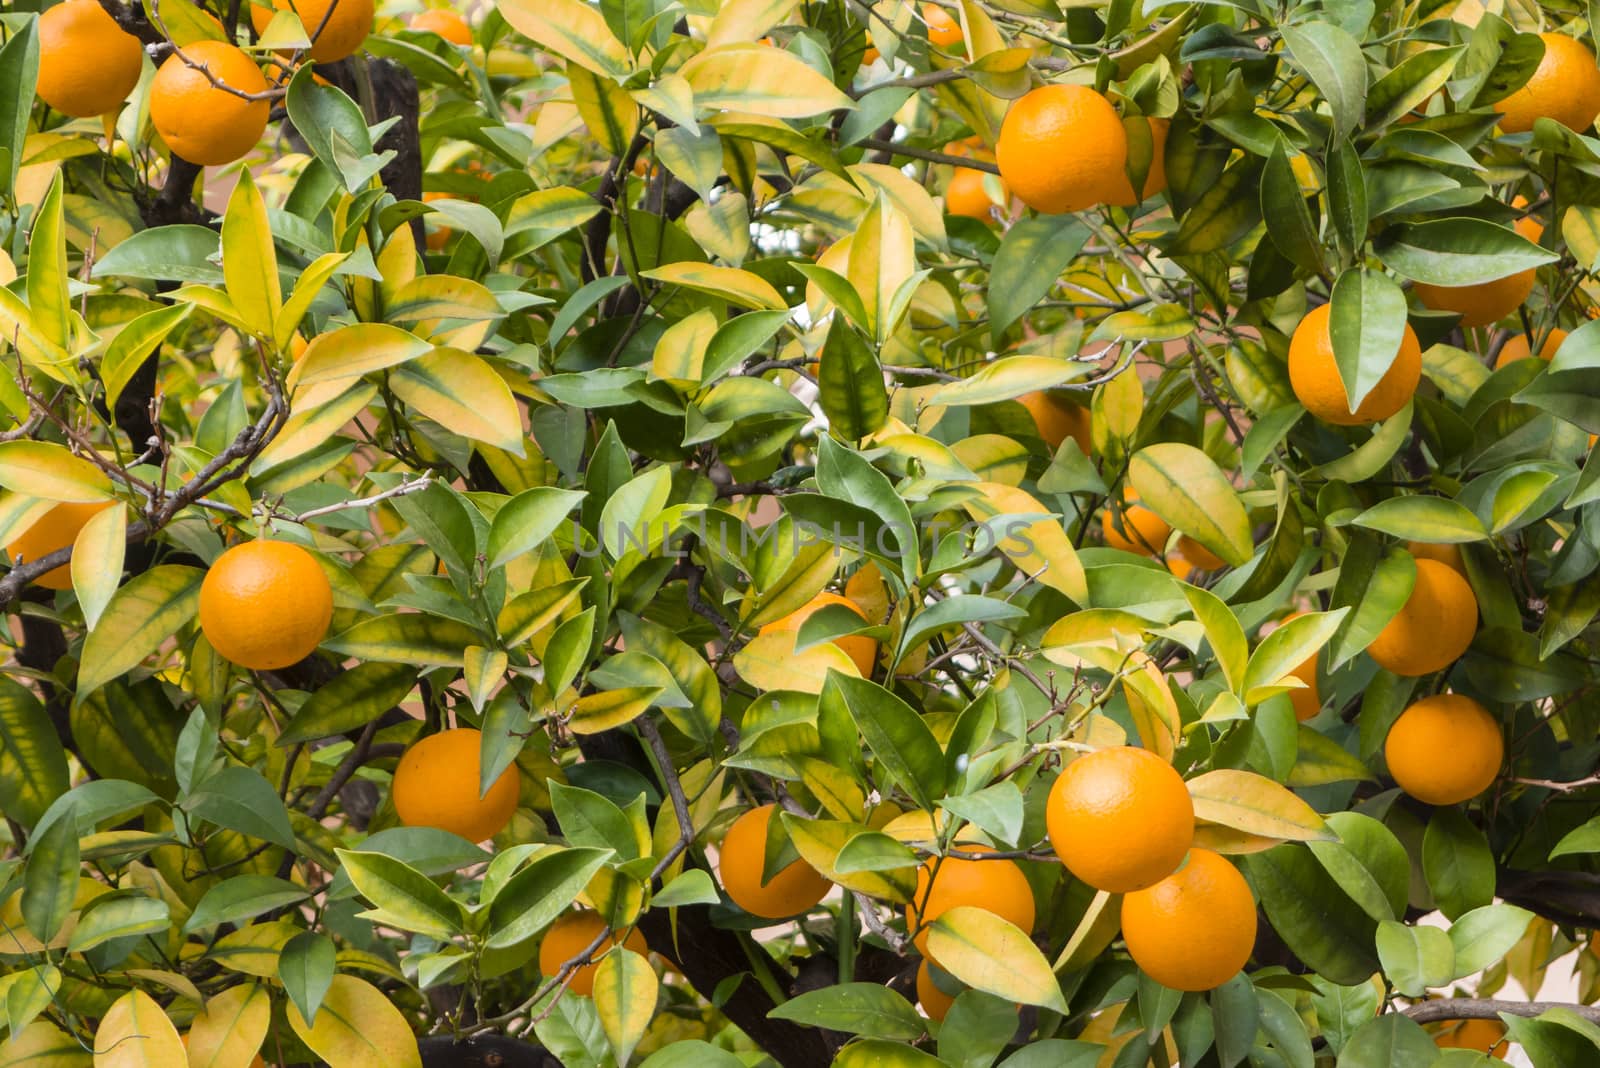 Orange fruits on trees in winter time, Citrus sinensis